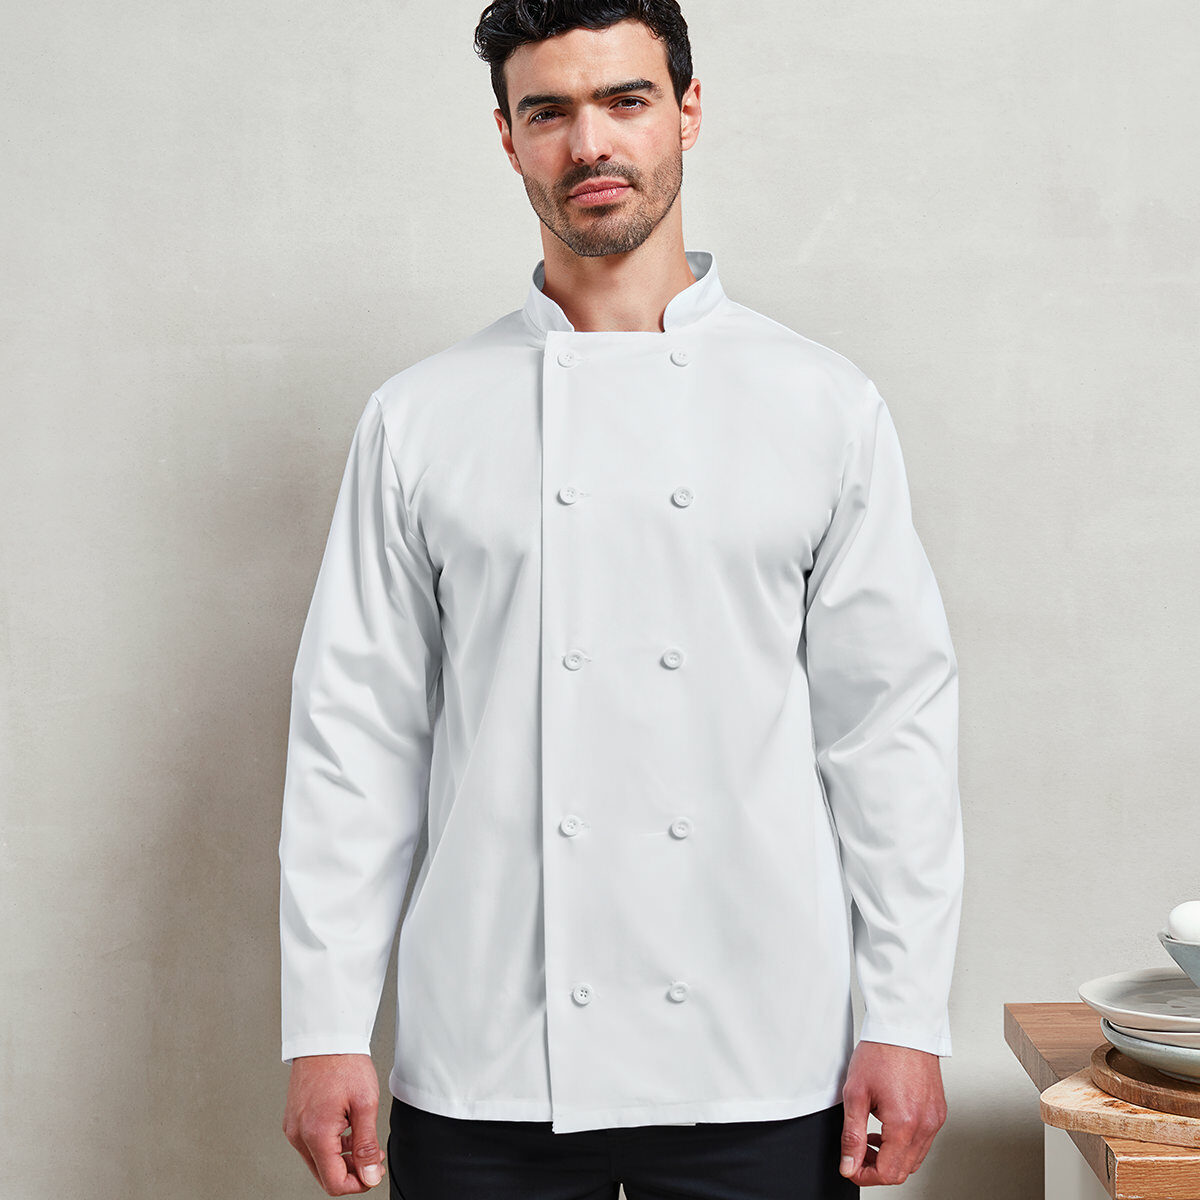 Long sleeve chefs jacket